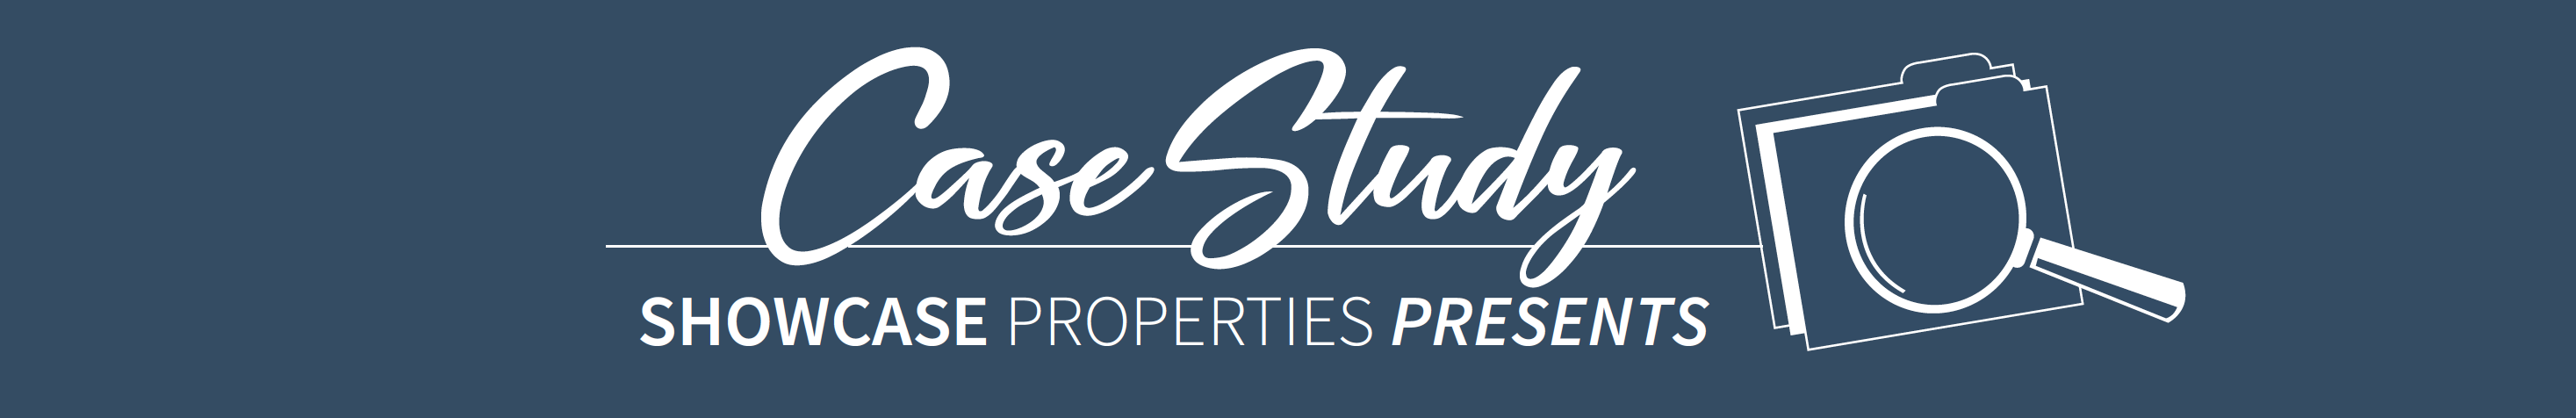 Showcase Properties Presents: Case Study